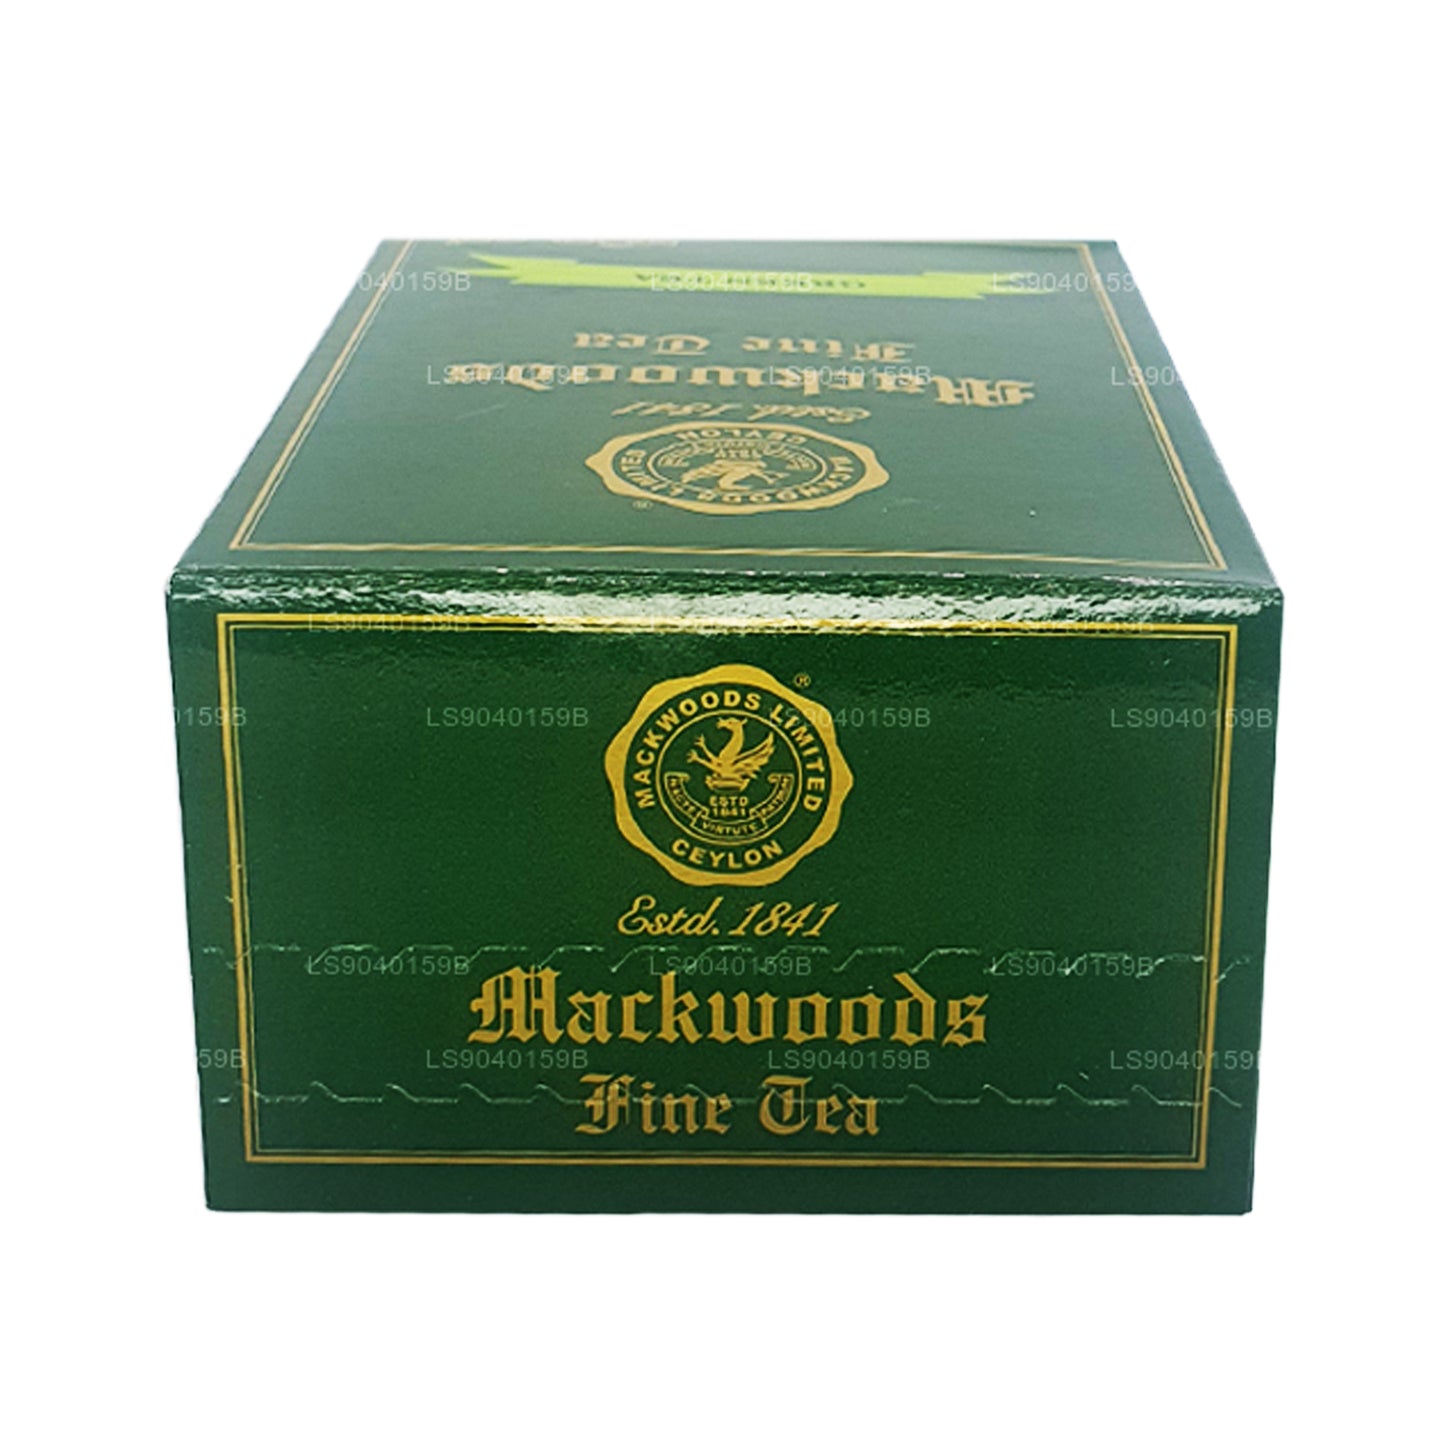 Mackwoods Loose Leaf Green Tea (100g)